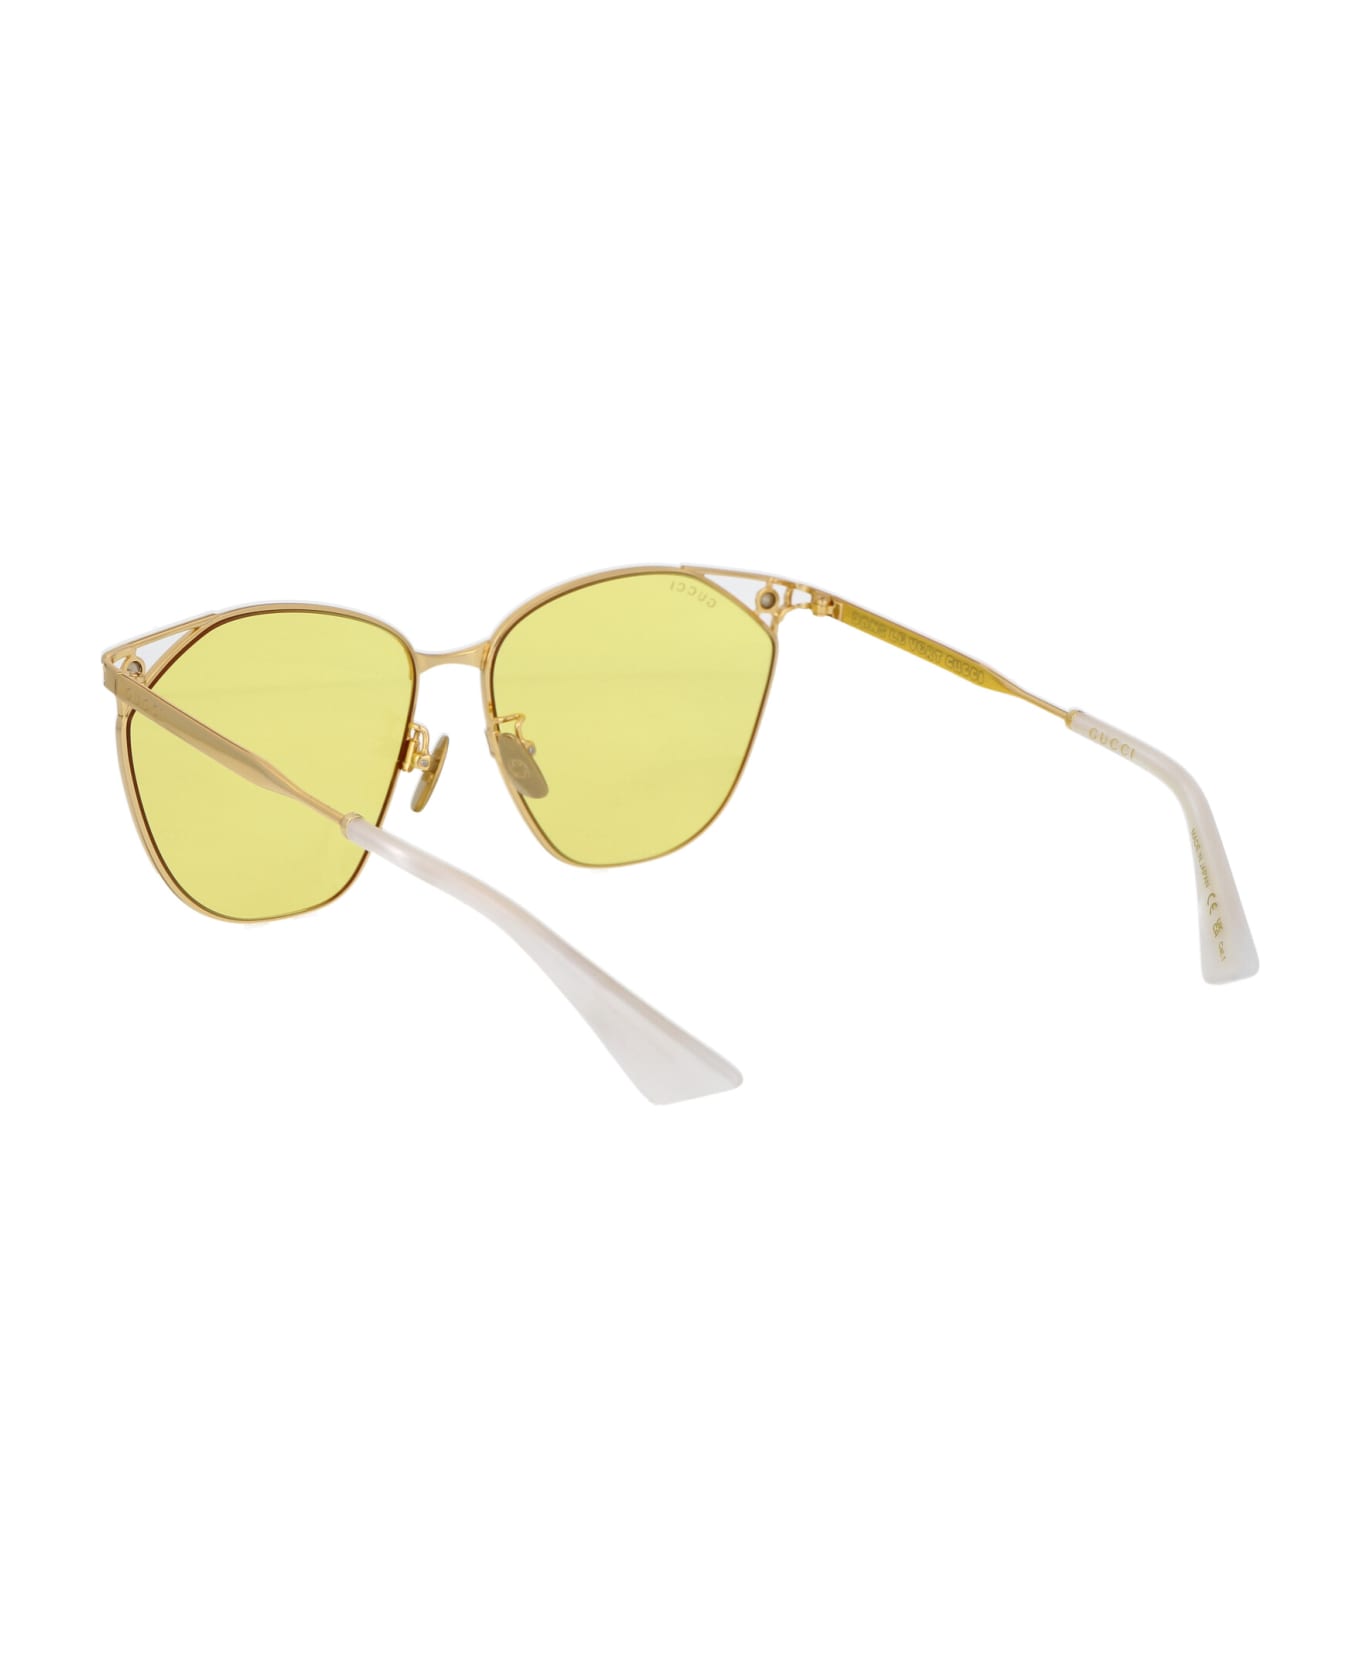 Gucci Eyewear Gg1375sa Sunglasses - 002 GOLD GOLD YELLOW